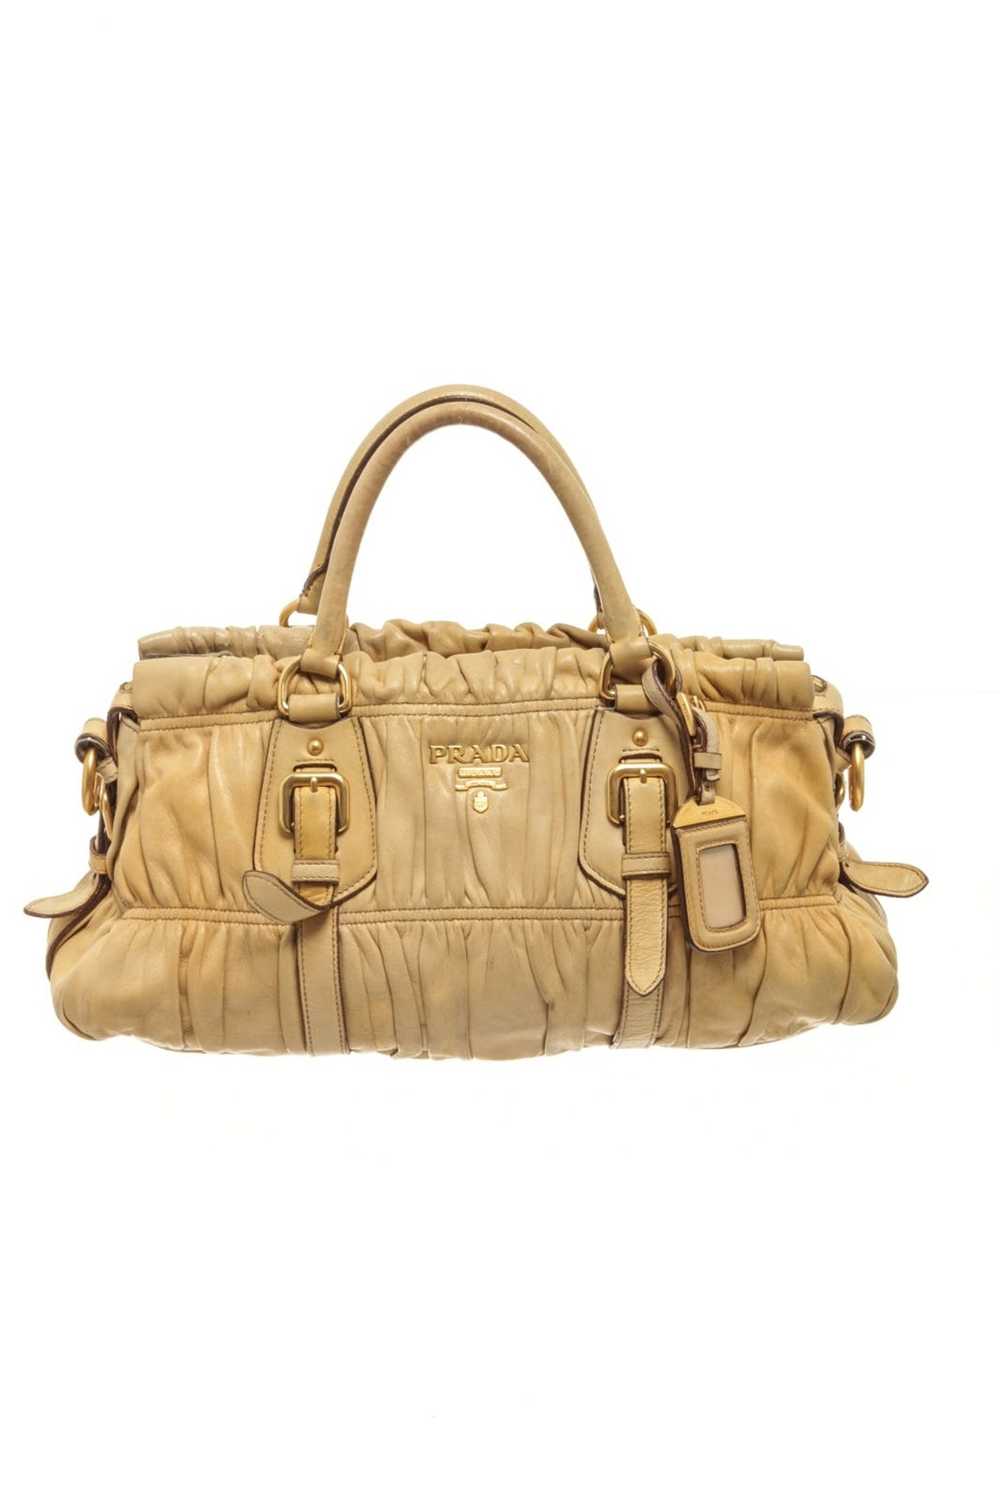 Prada Prada Light Brown Leather Shoulder Bag - image 2